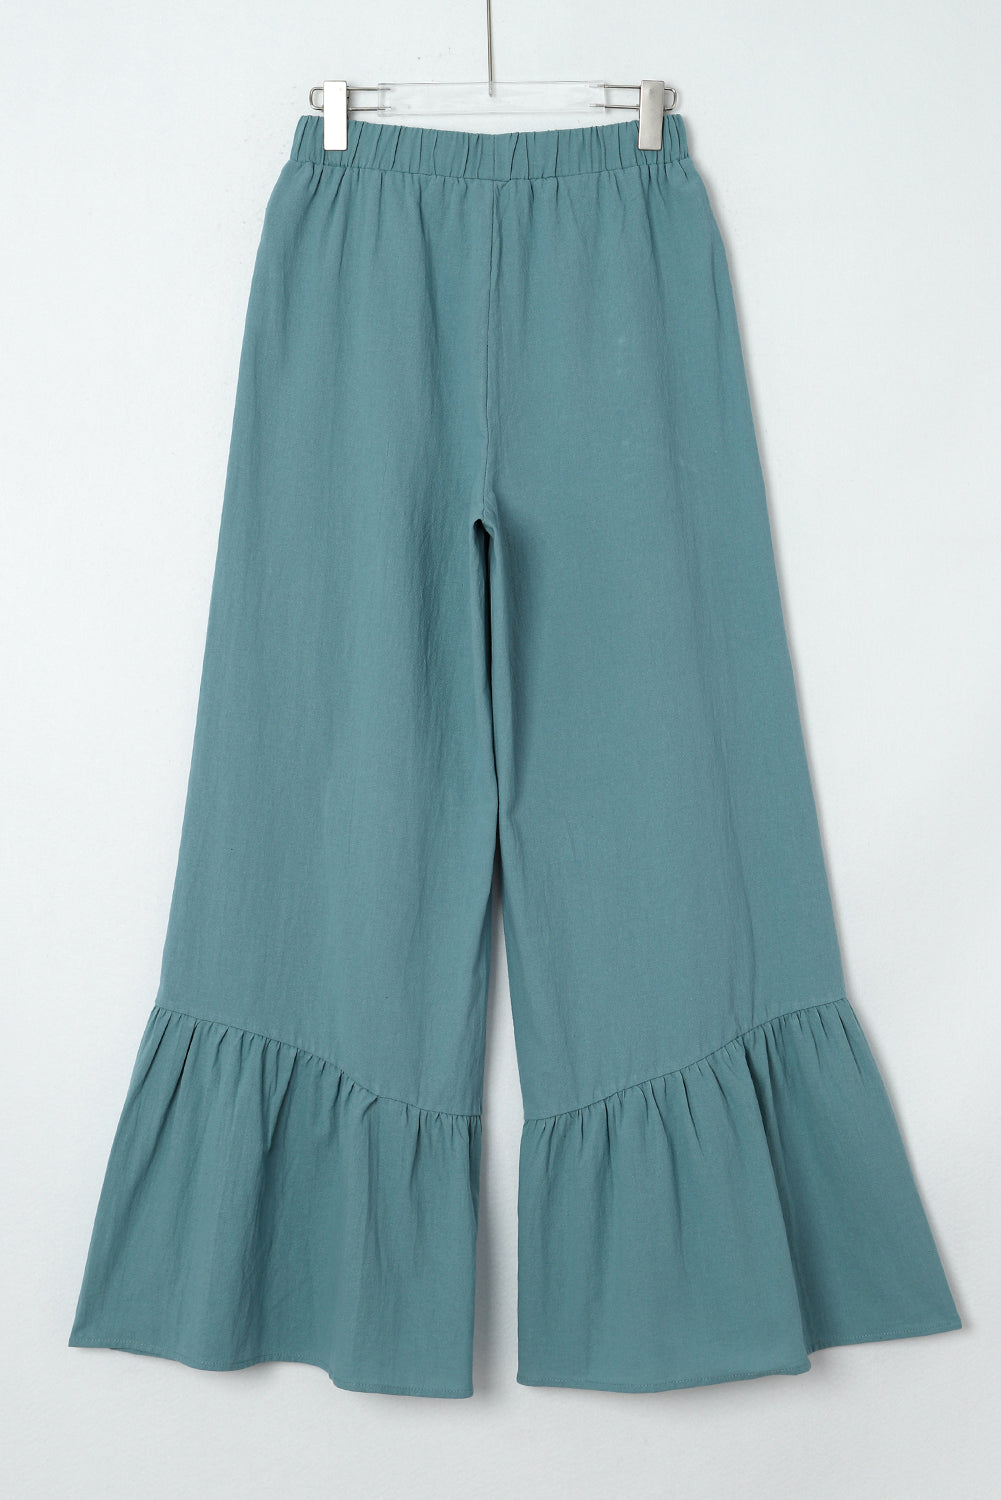 Sky Blue High Waist Ruffled Wide-Leg Womens Pants - US2EInc Apparel Plug Ltd. Co